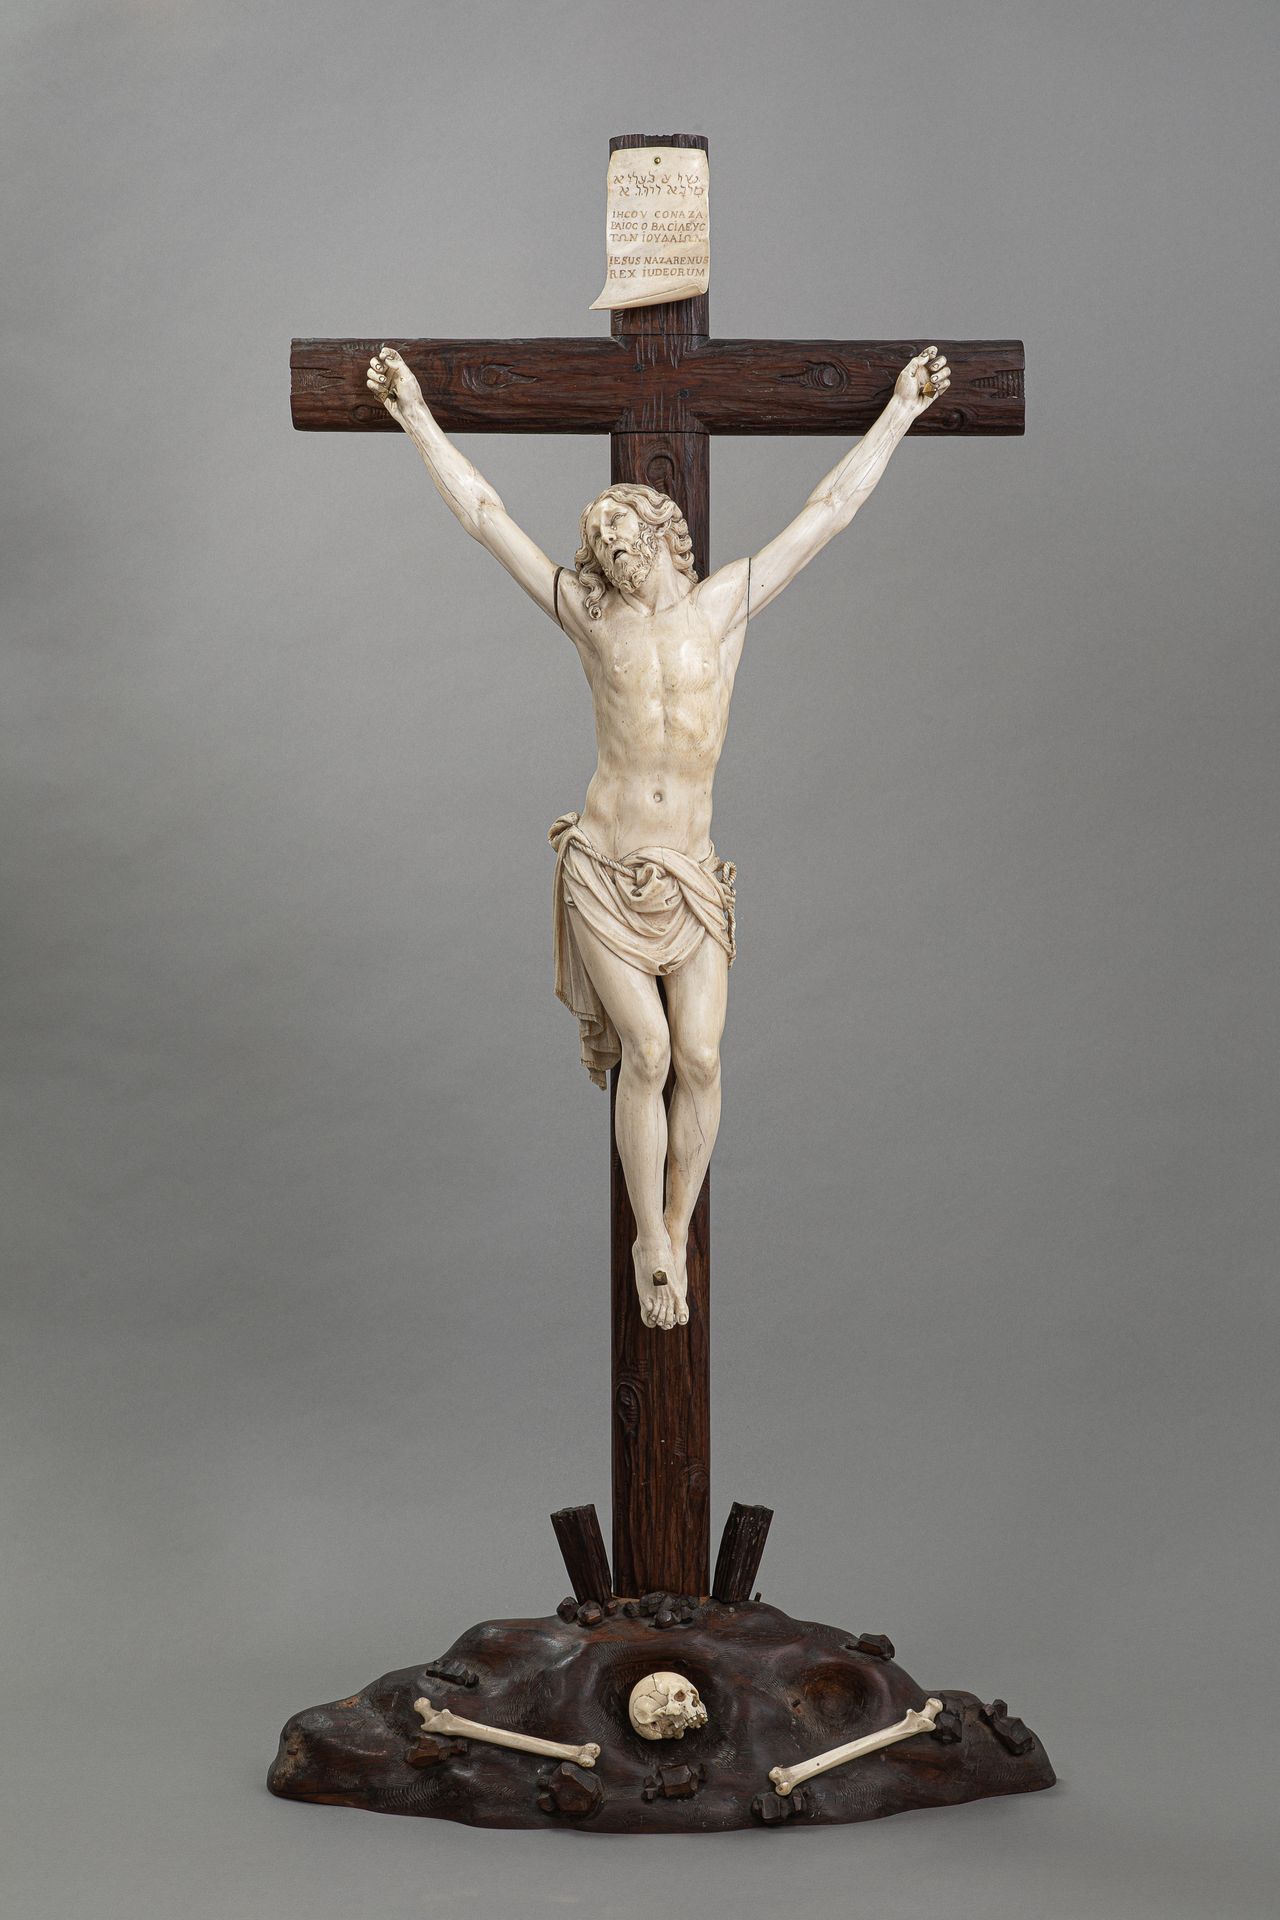 Null 沃尔特-庞贝（1703-1777） 安特卫普，1771年

十字架上的基督

象牙色

签名：1771 Walterus Pompe fecit .A&hellip;